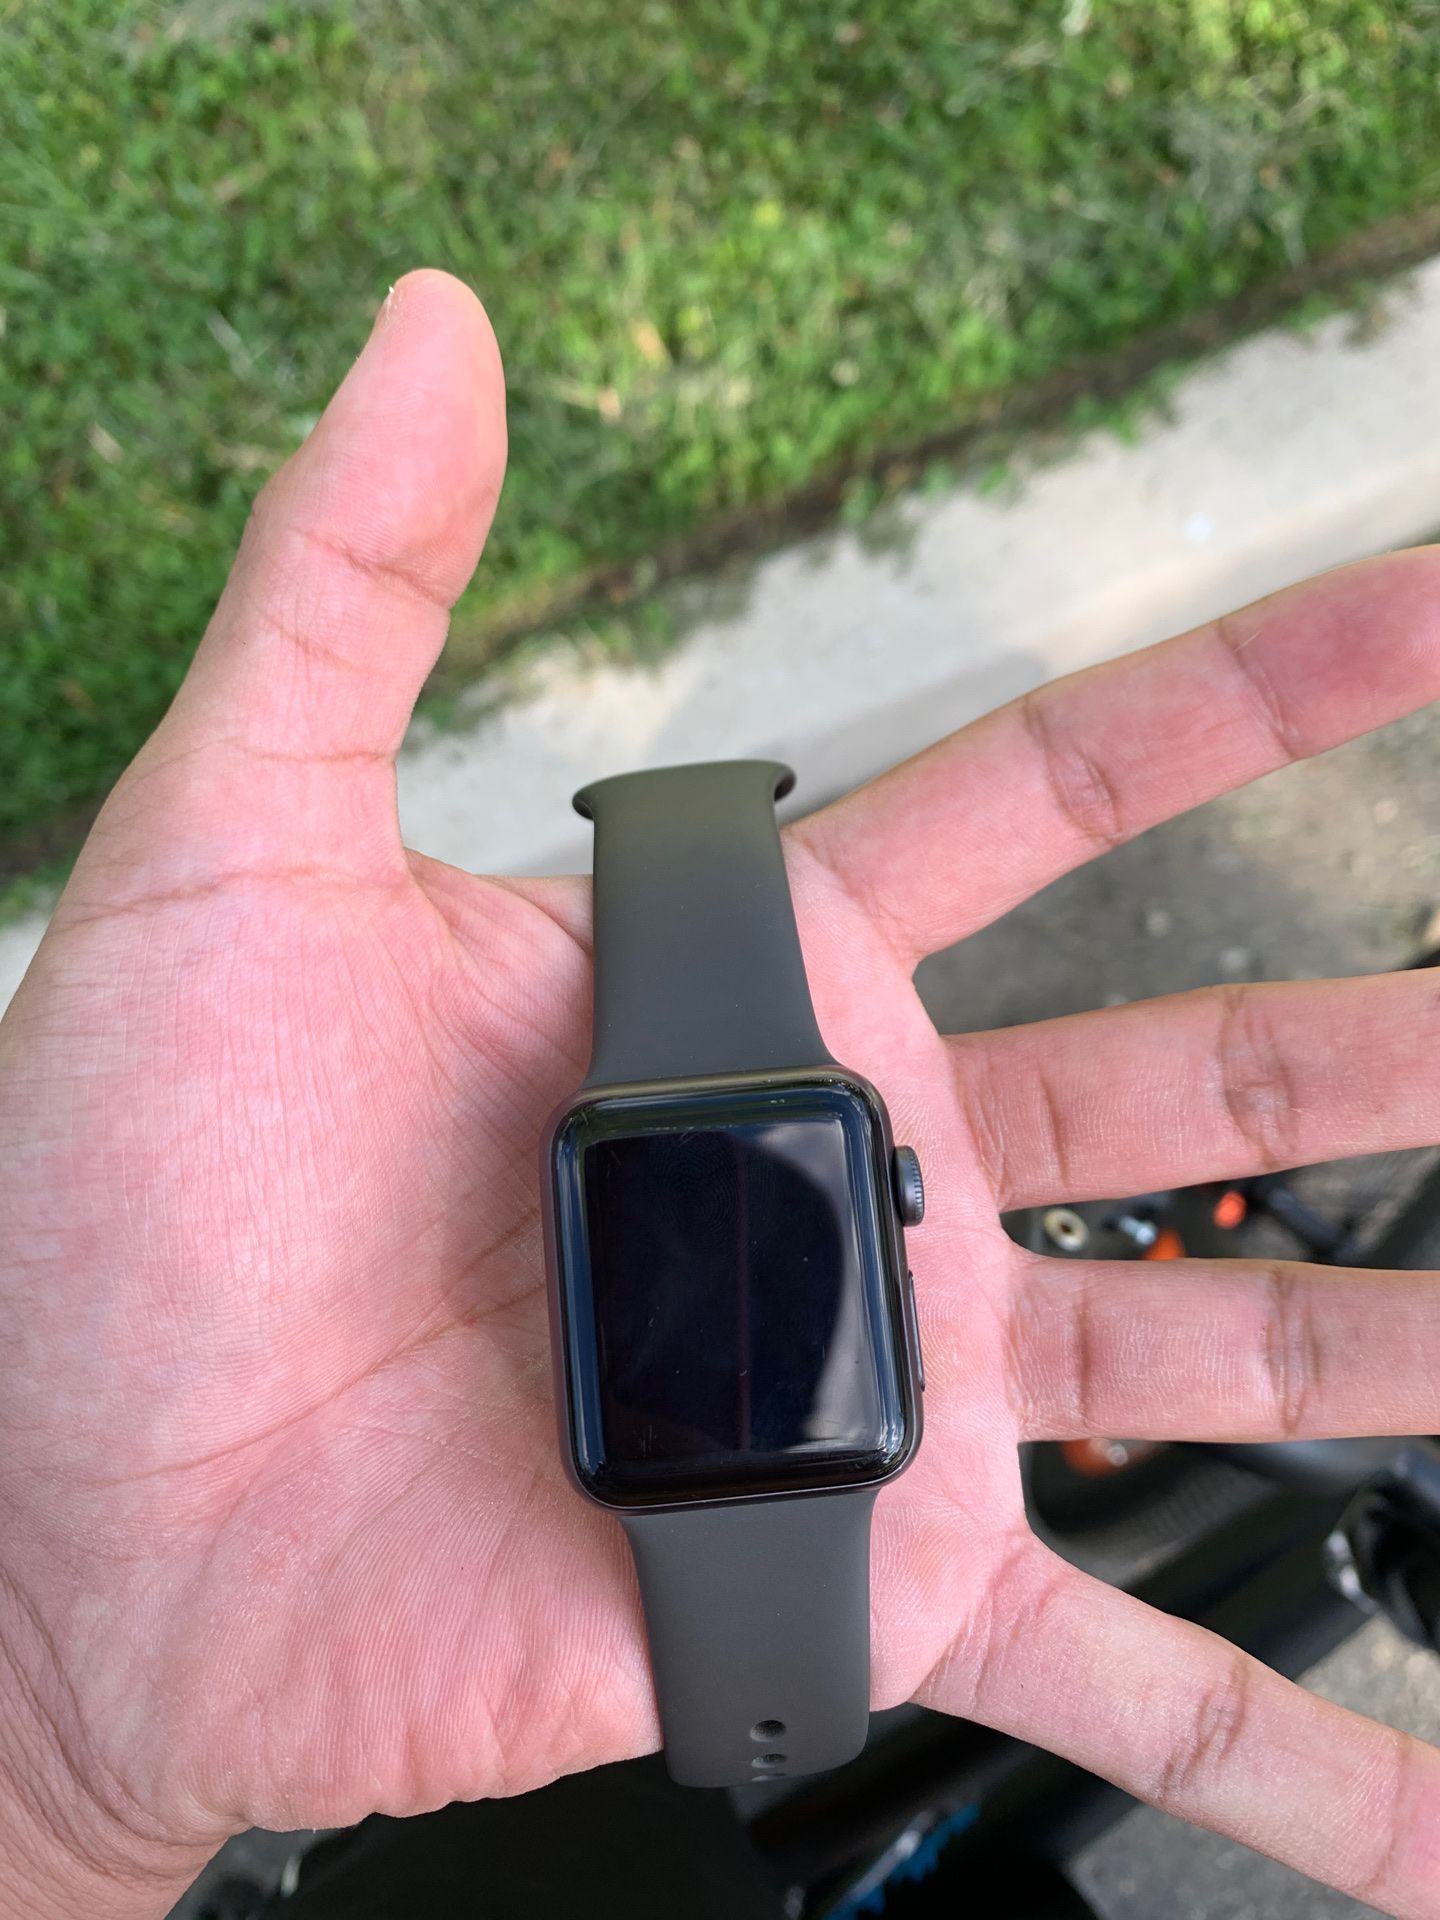 Apple Watch series 3 (locked)